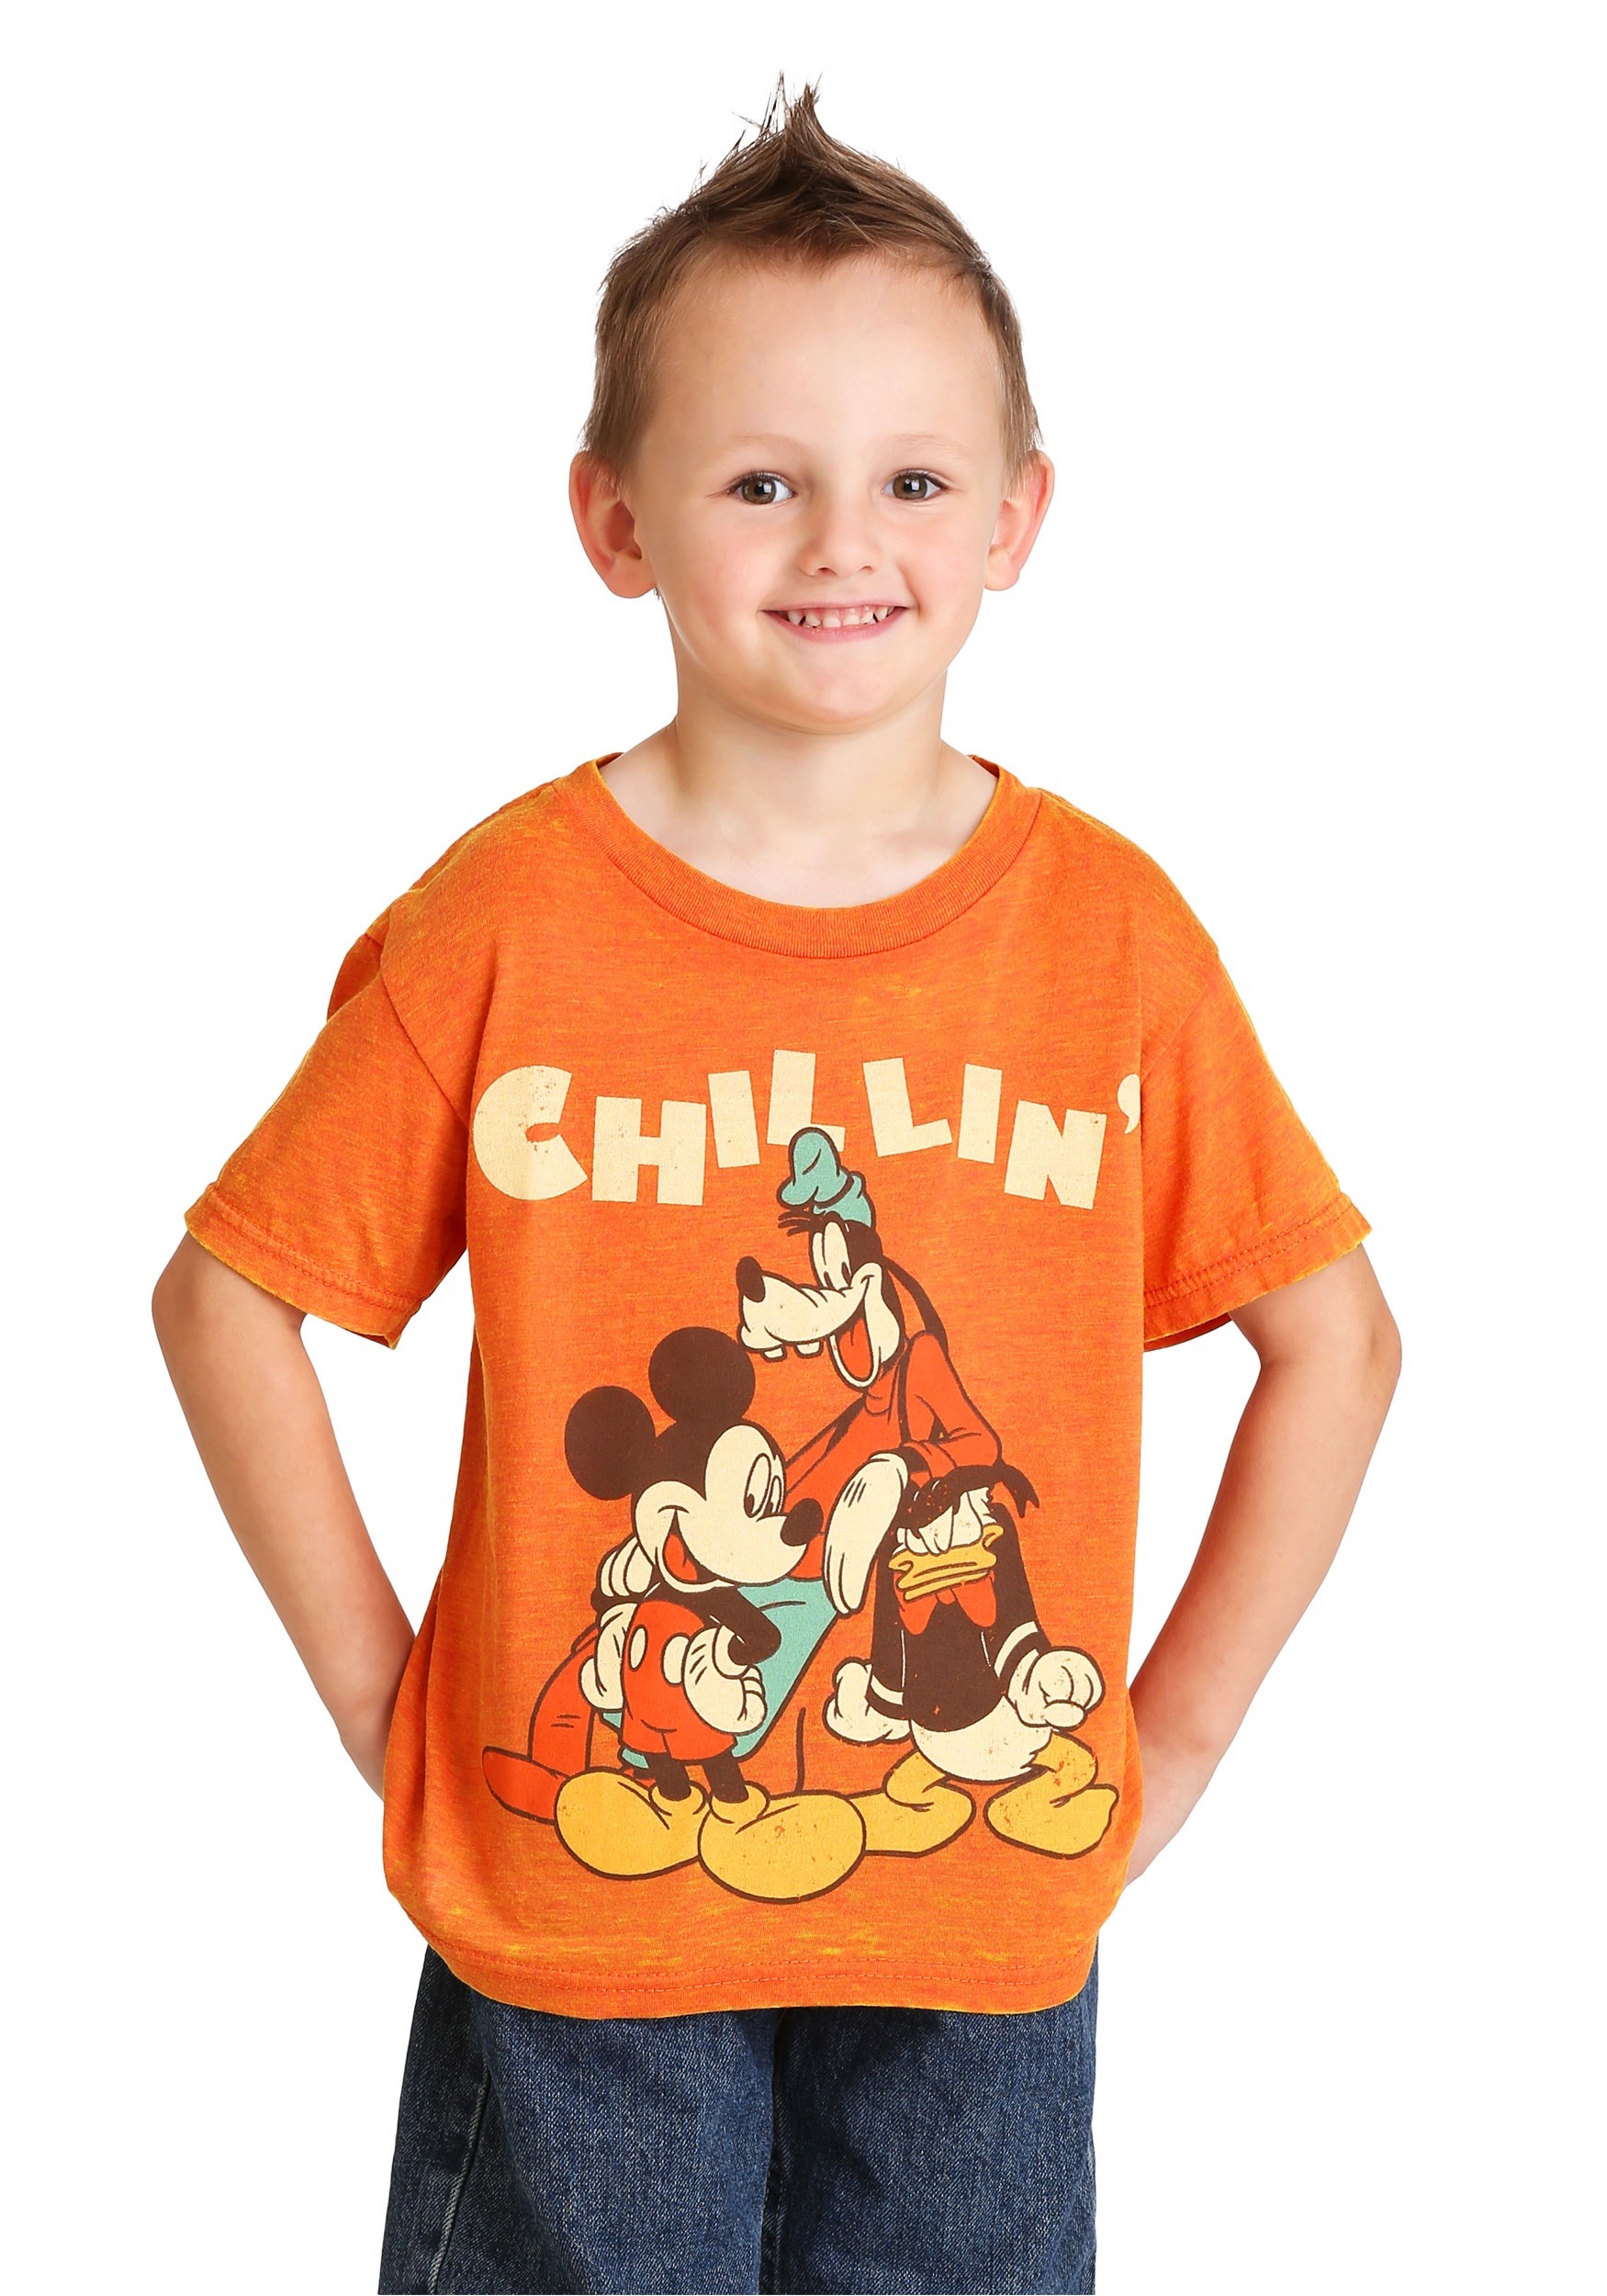 Chillin Trio Boys Orange Burnout T-Shirt - Disney Mickey Mouse